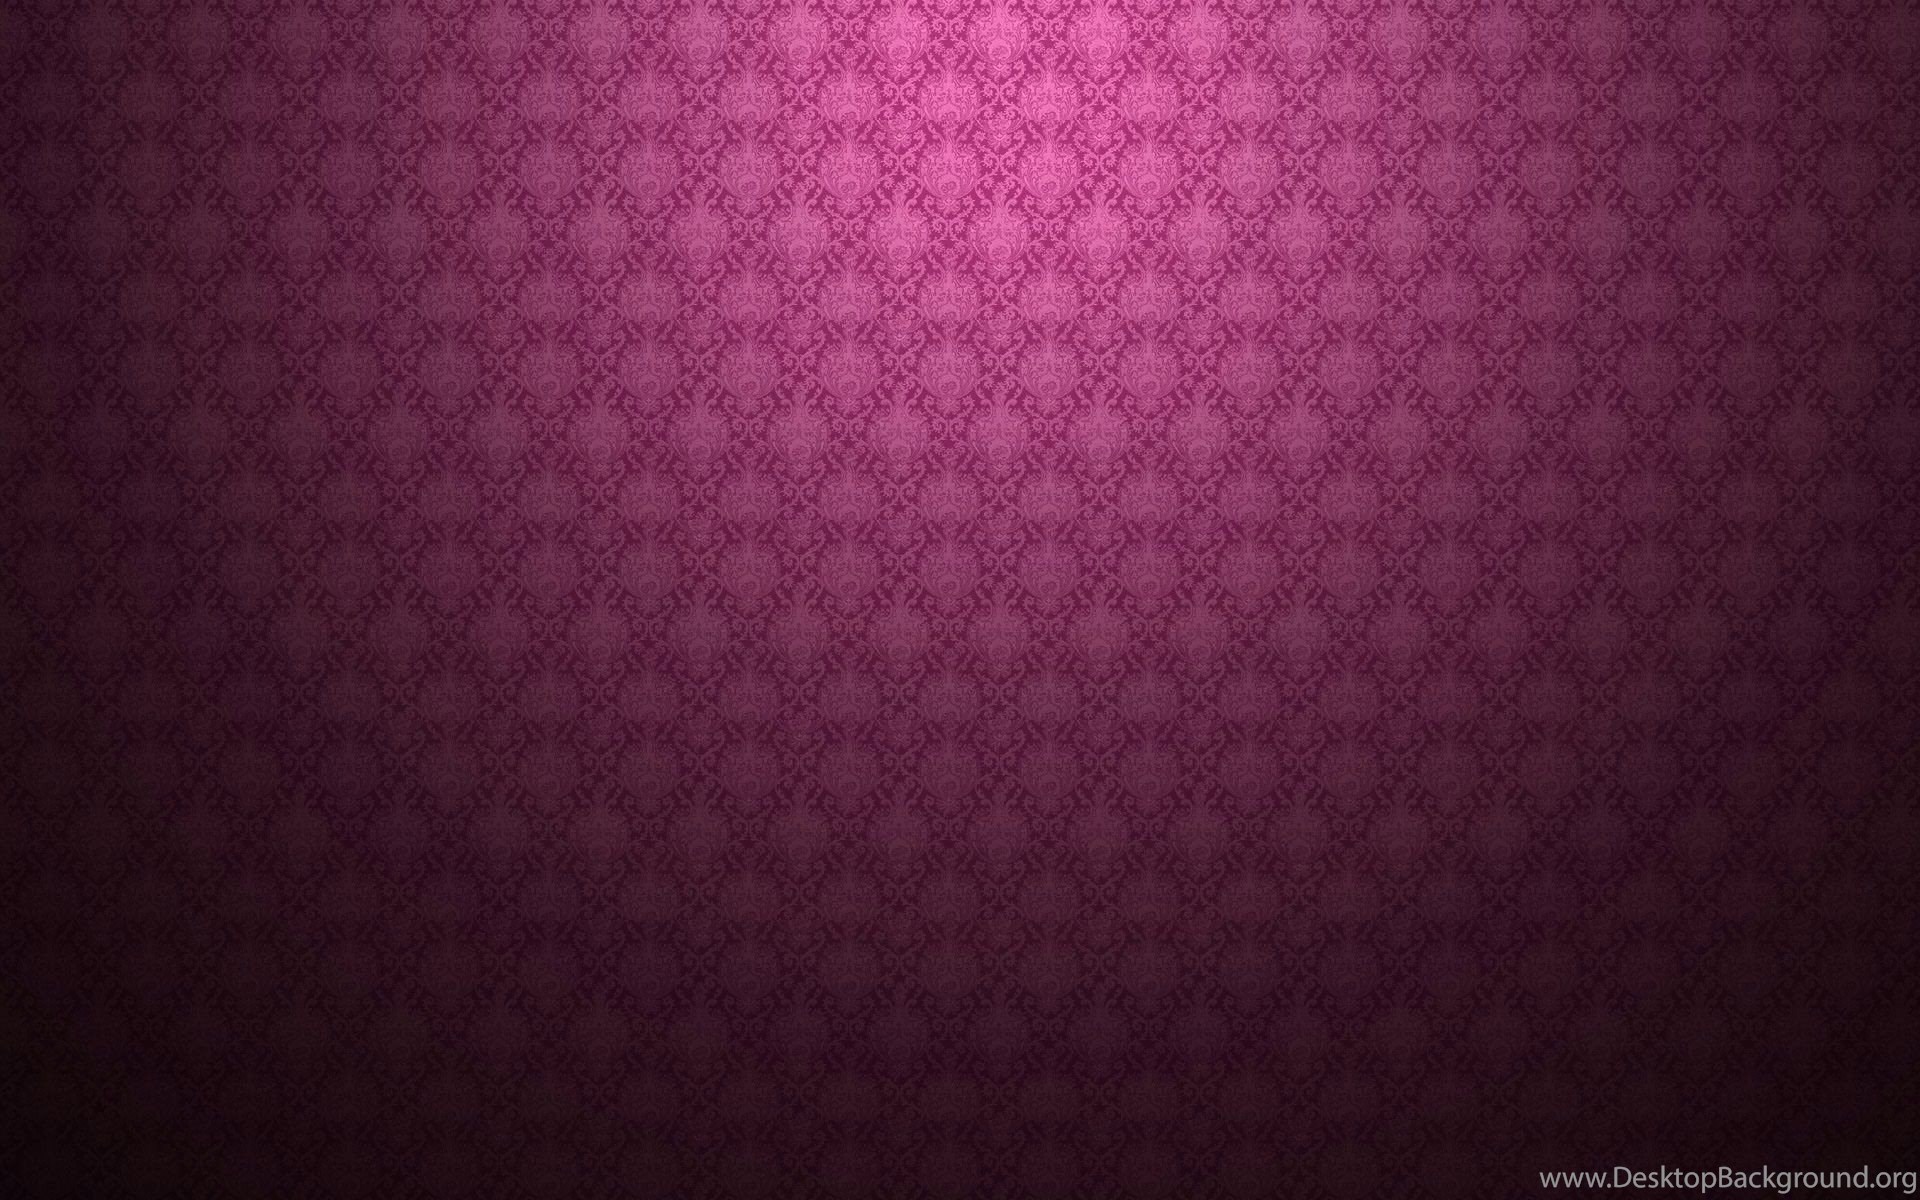 Beautiful Patterns Background Image Wallpaper Desktop Background